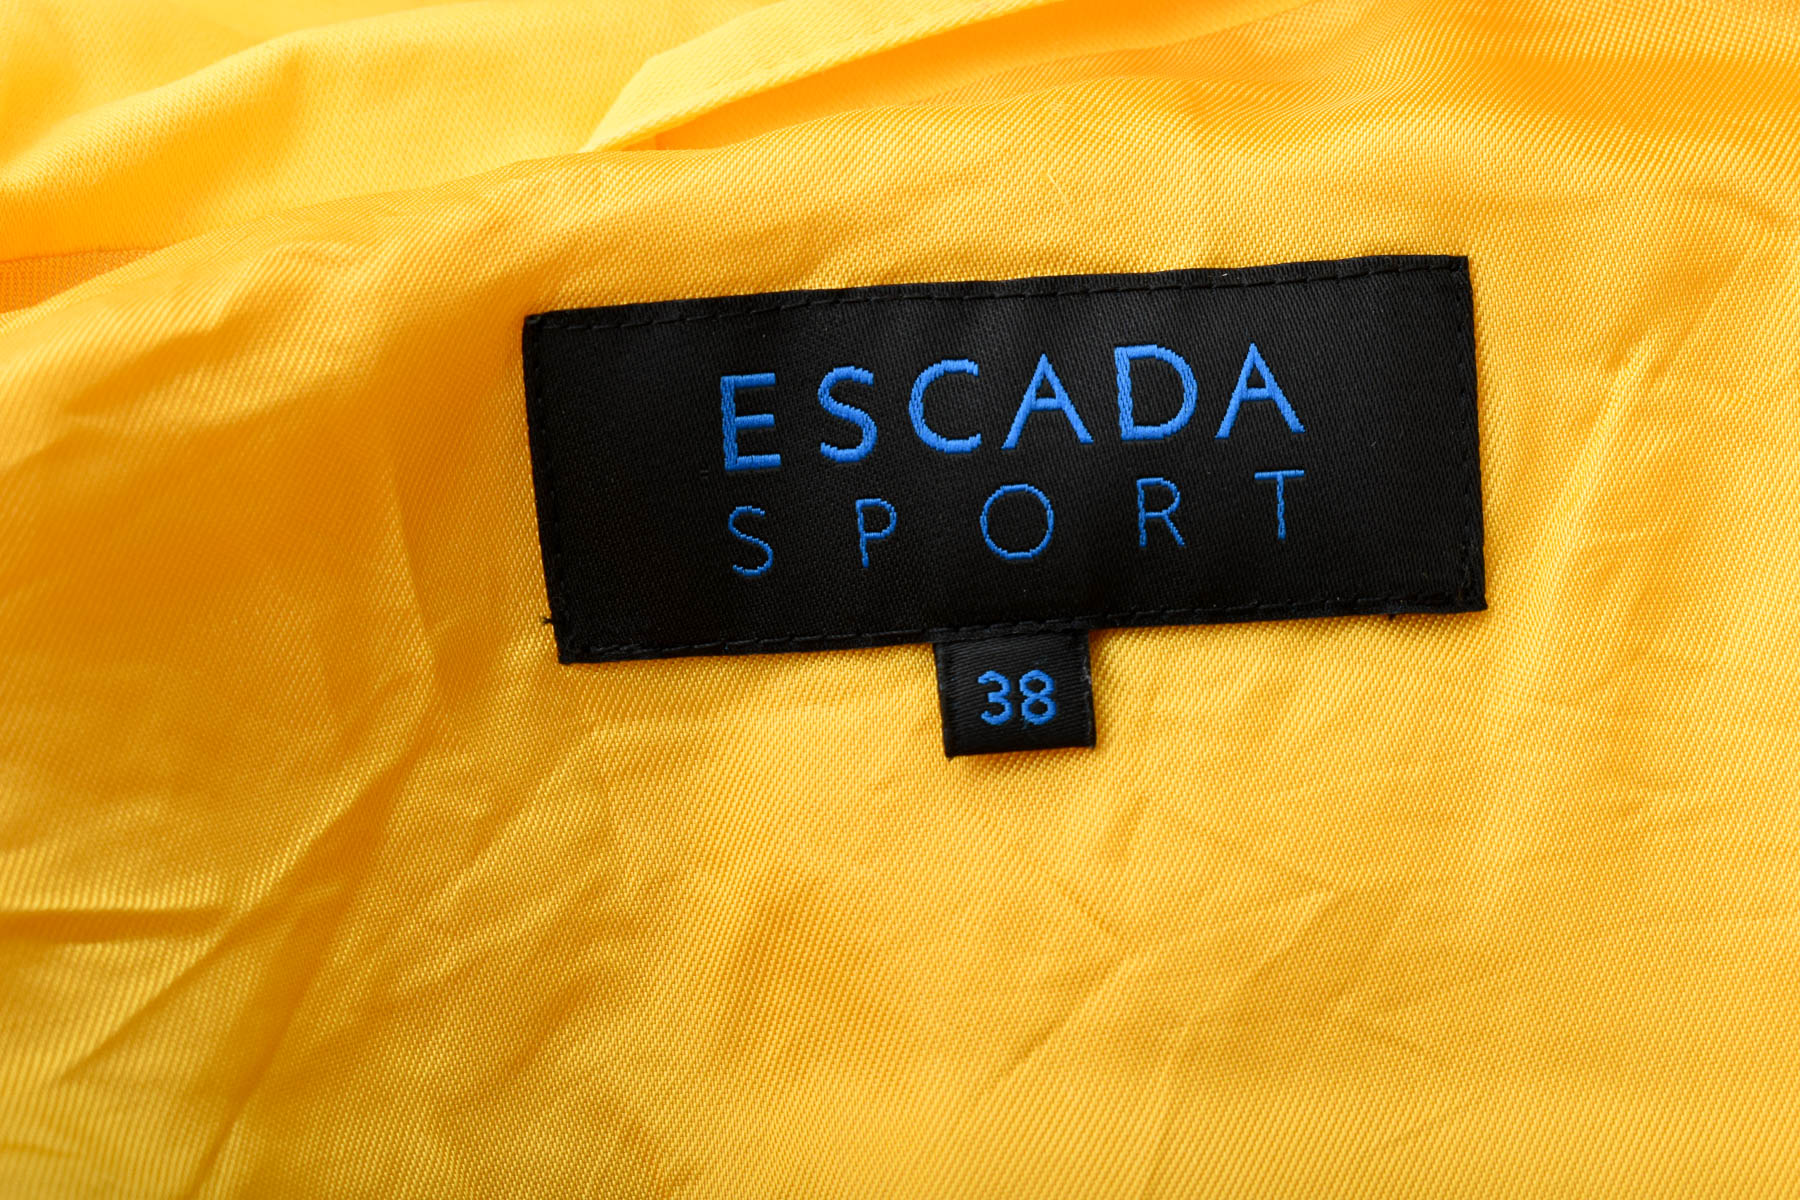 Ladies' Trench Coat - ESCADA SPORT - 2